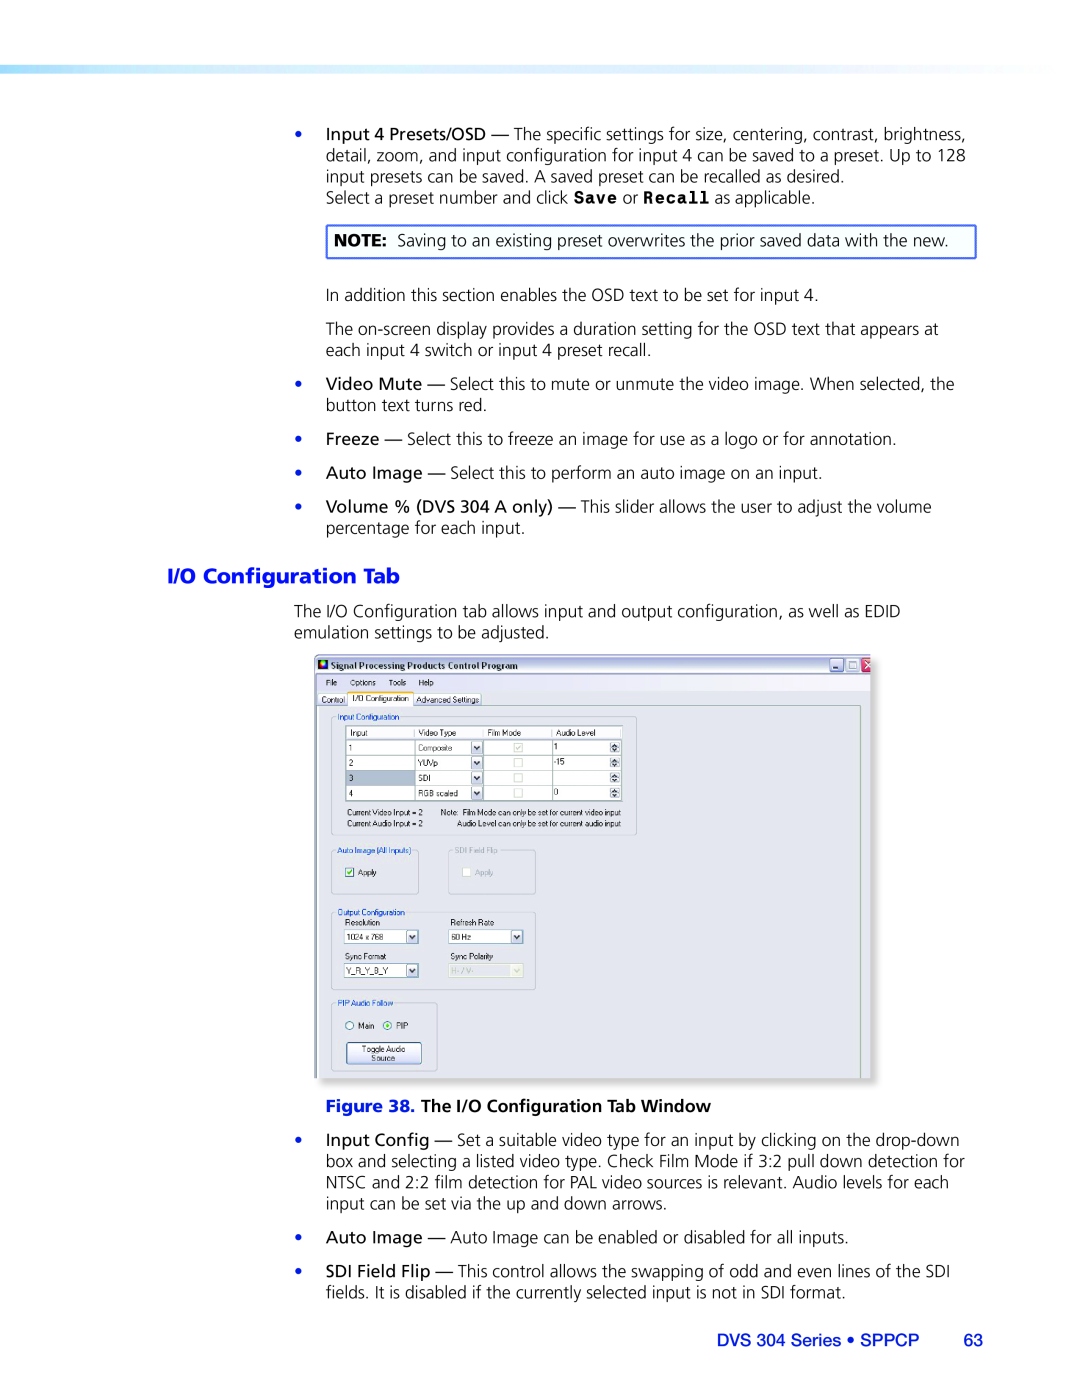 Extron electronic manual The I/O Configuration Tab Window, DVS 304 Series • SPPCP 